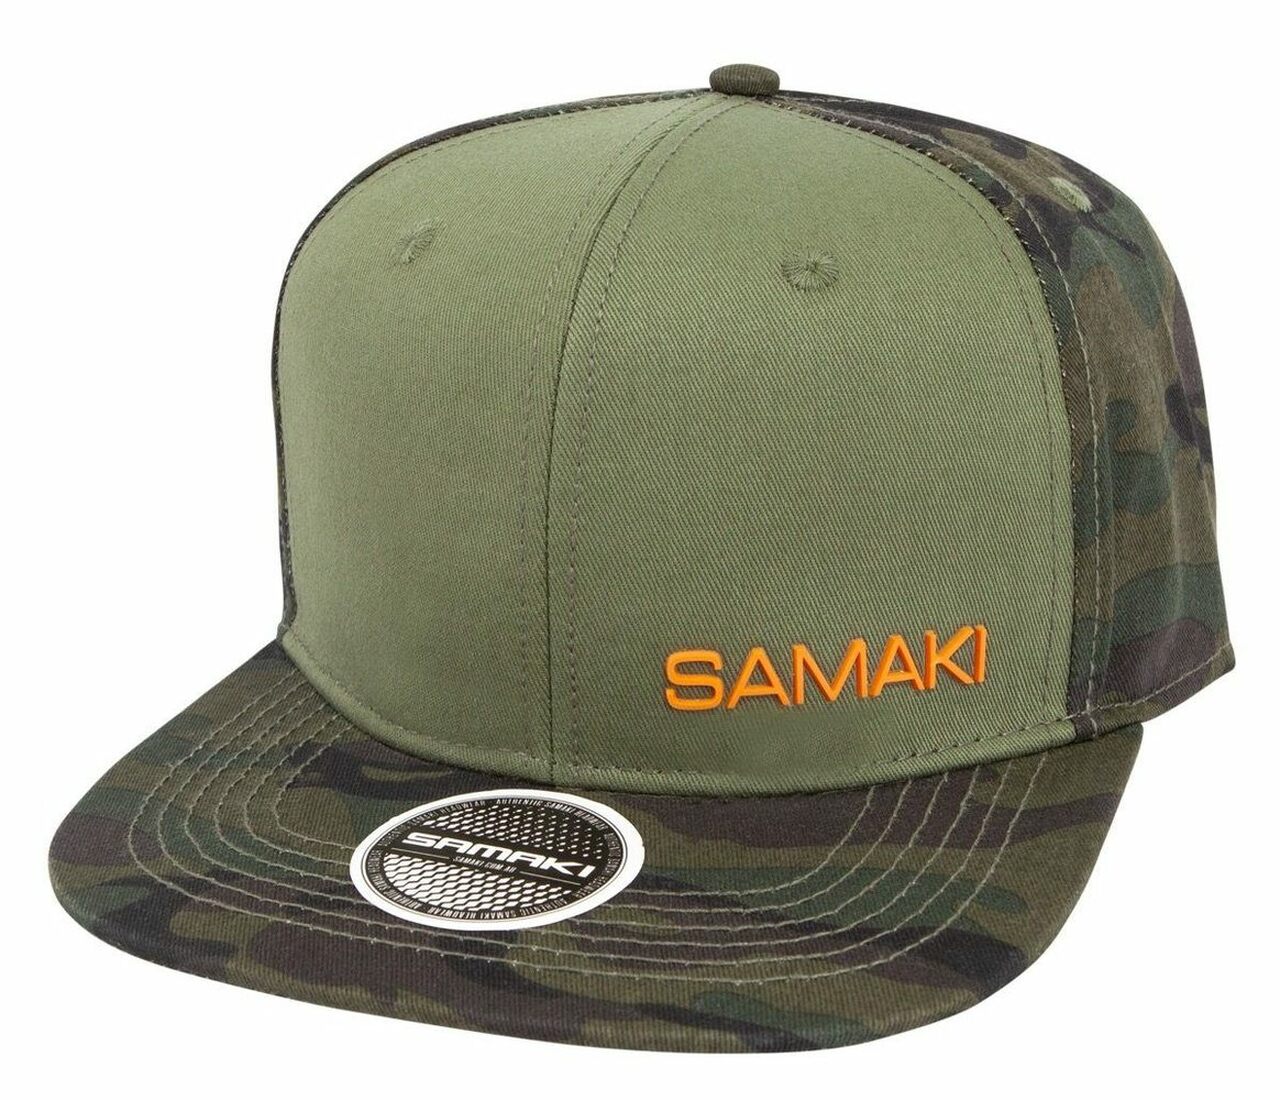 Samaki Under The Radar Cap - Olive